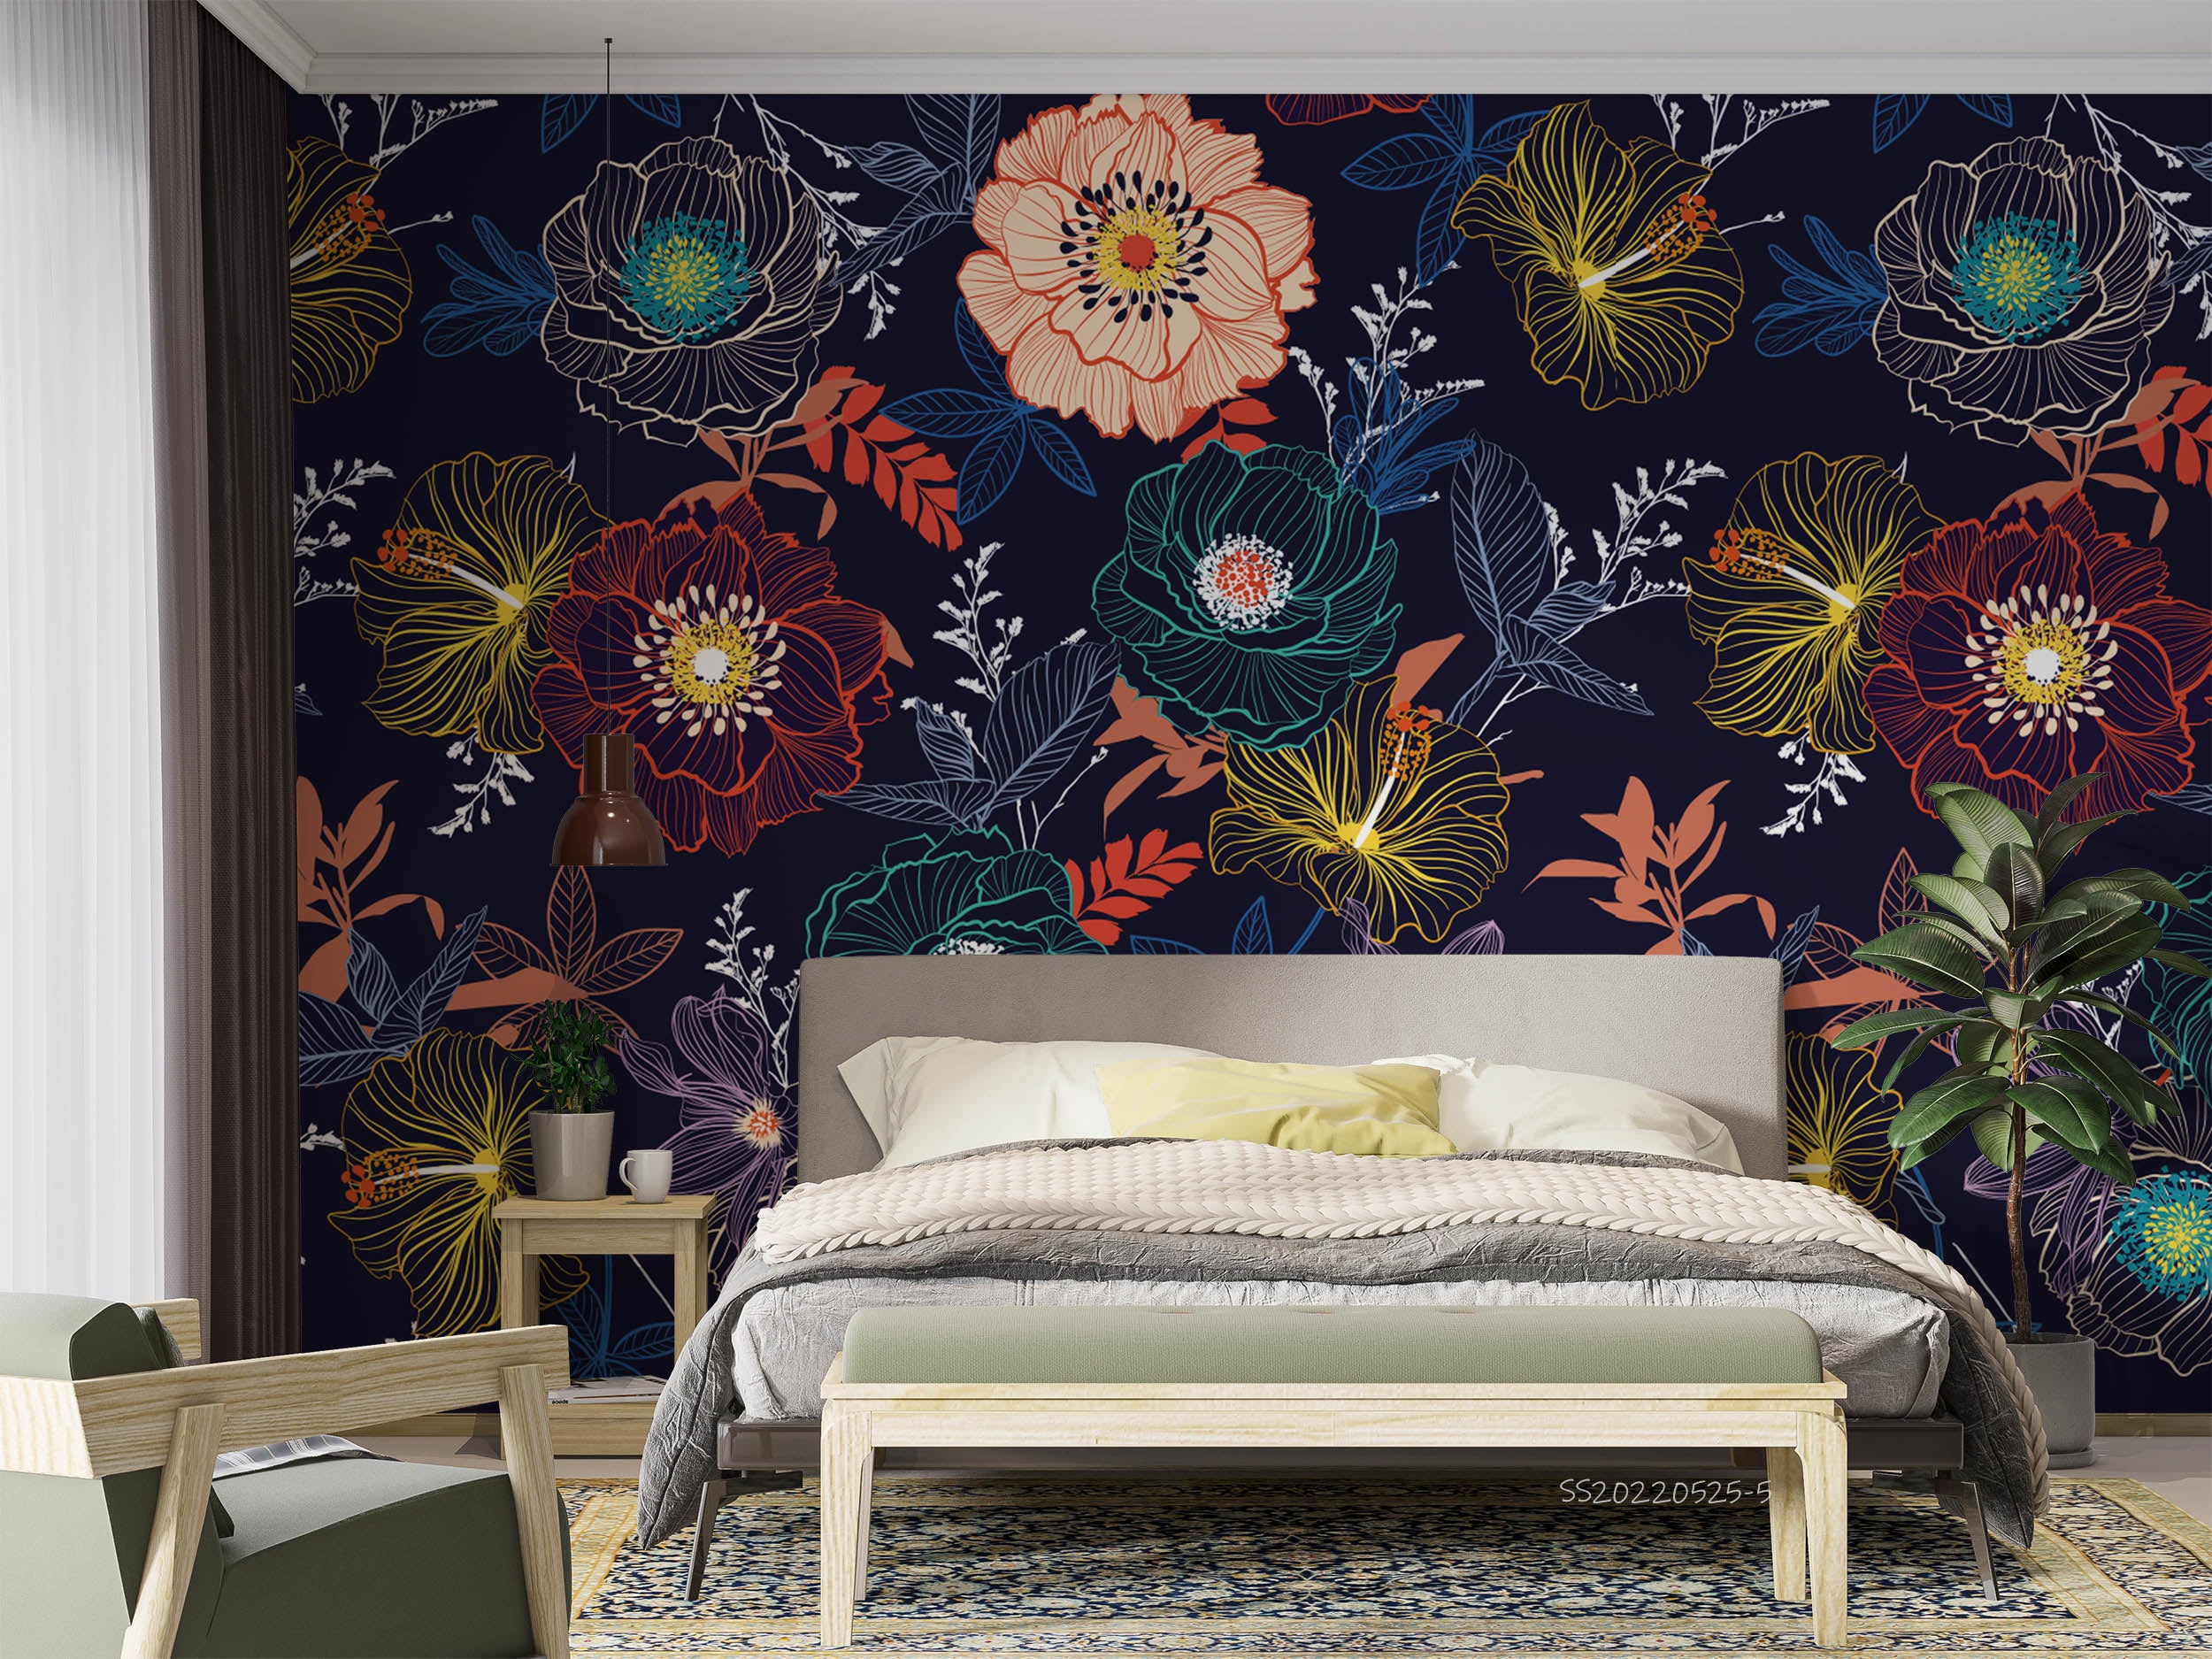 3D Vintage Floral Pattern Dark Background Wall Mural Wallpaper GD 930- Jess Art Decoration